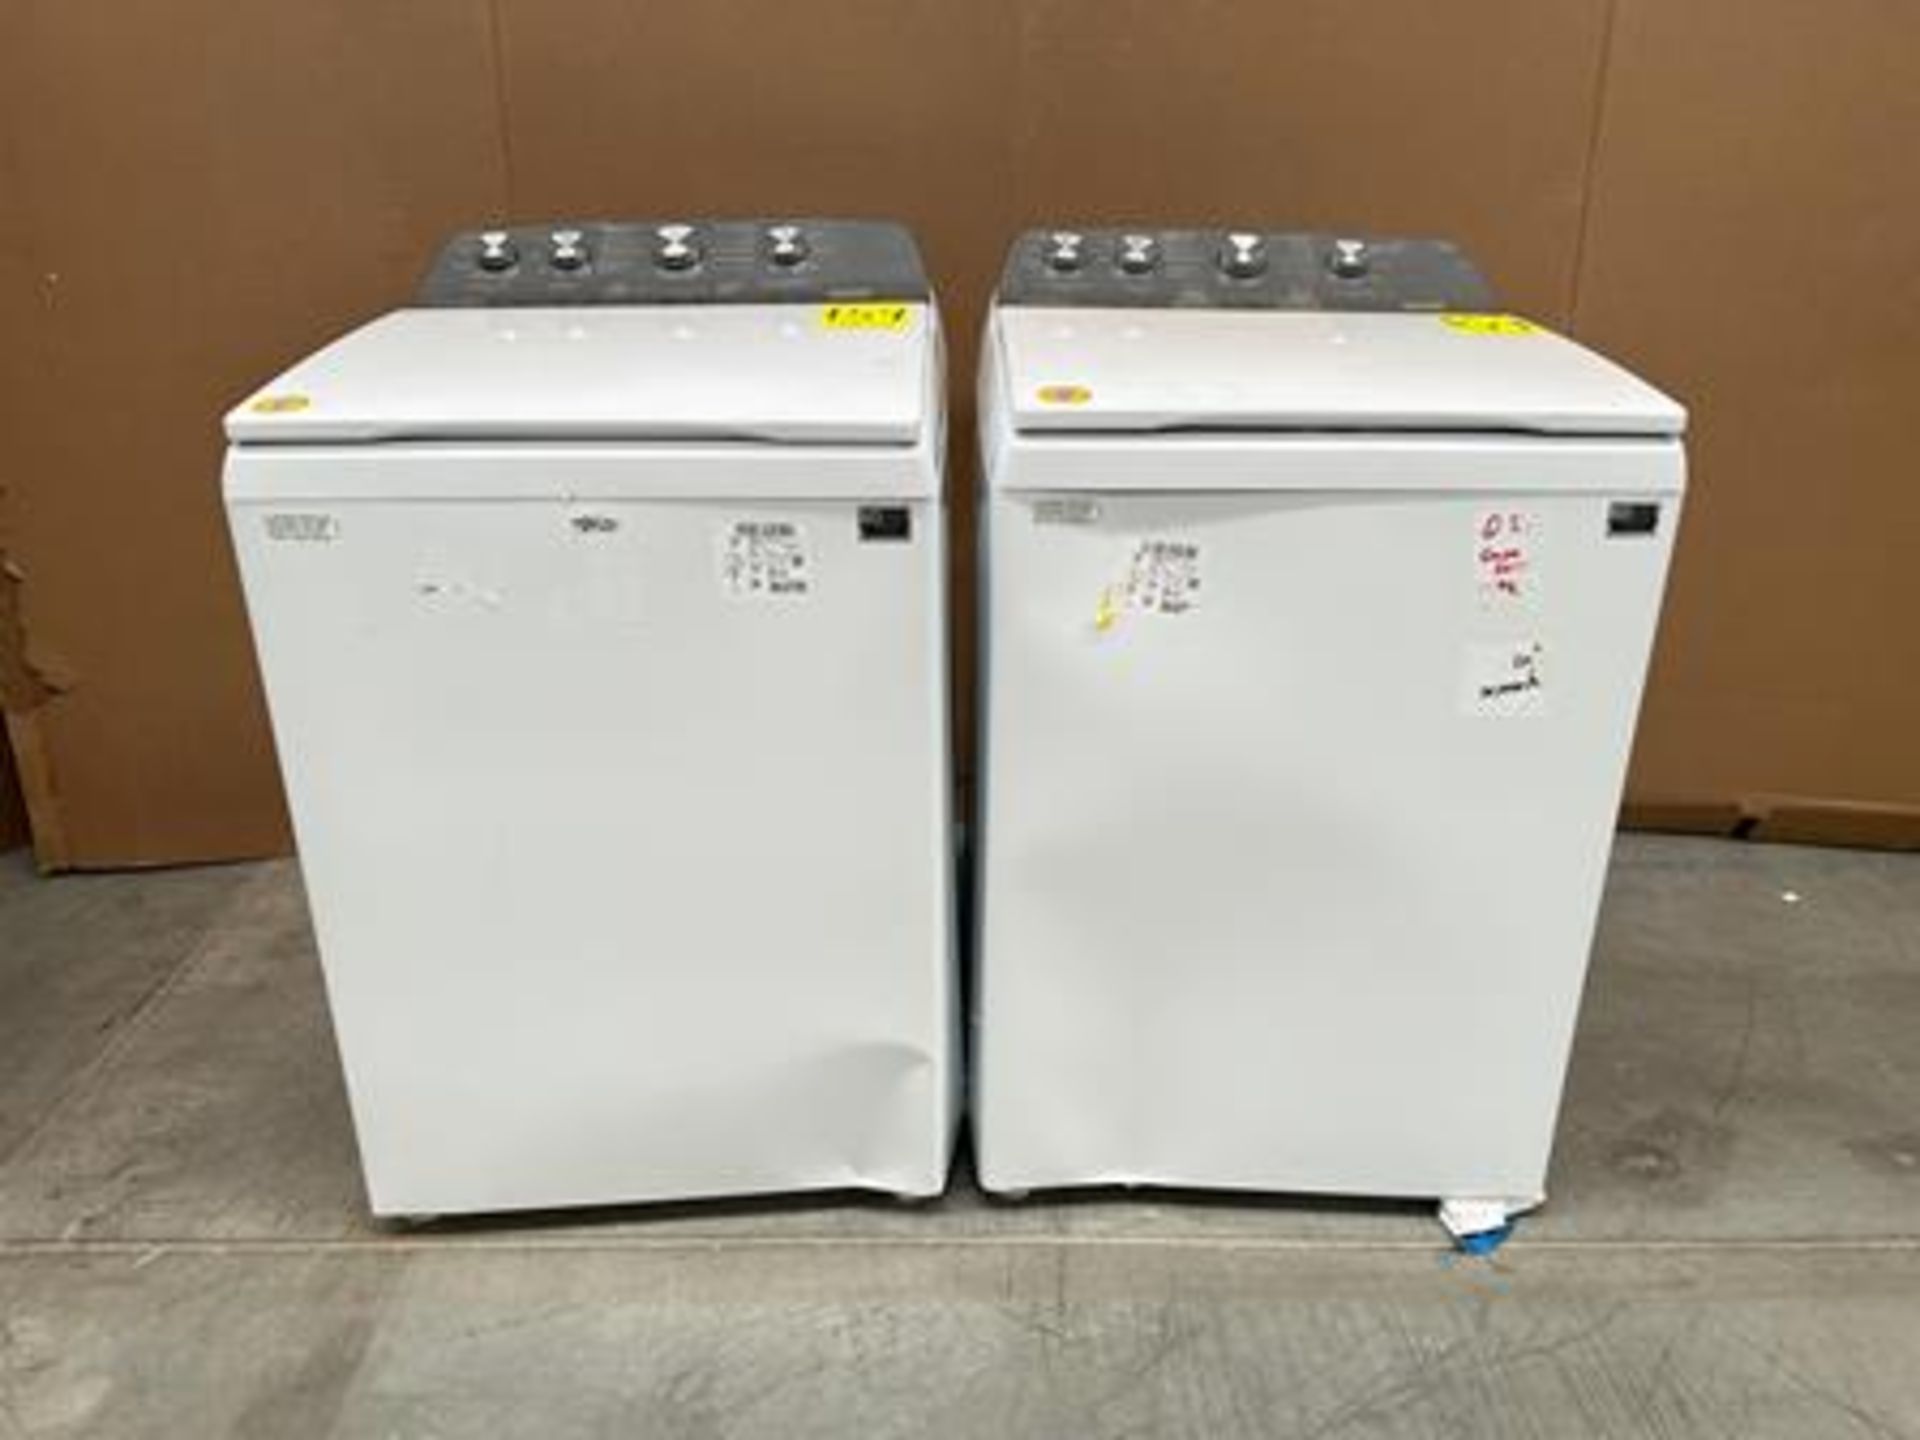 Lote de 2 lavadoras contiene: 1 lavadora de 22 kg marca Whirlpool, modelo 8MWTW2224MPM0, serie 7034